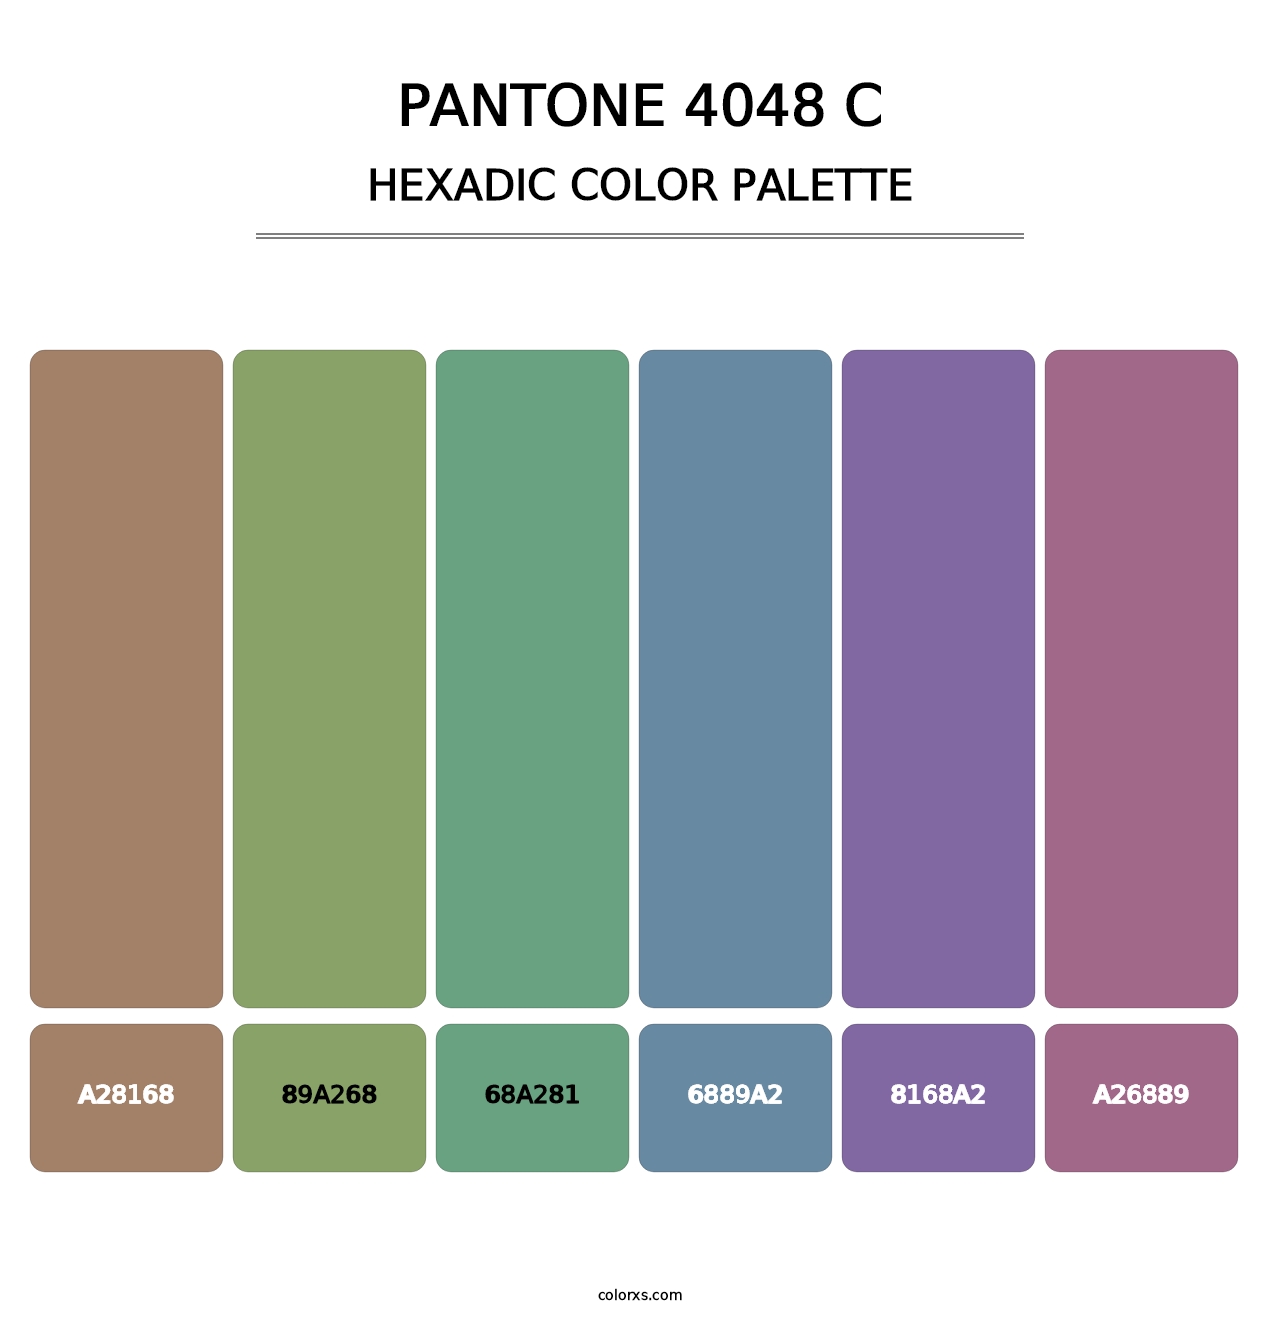 PANTONE 4048 C - Hexadic Color Palette